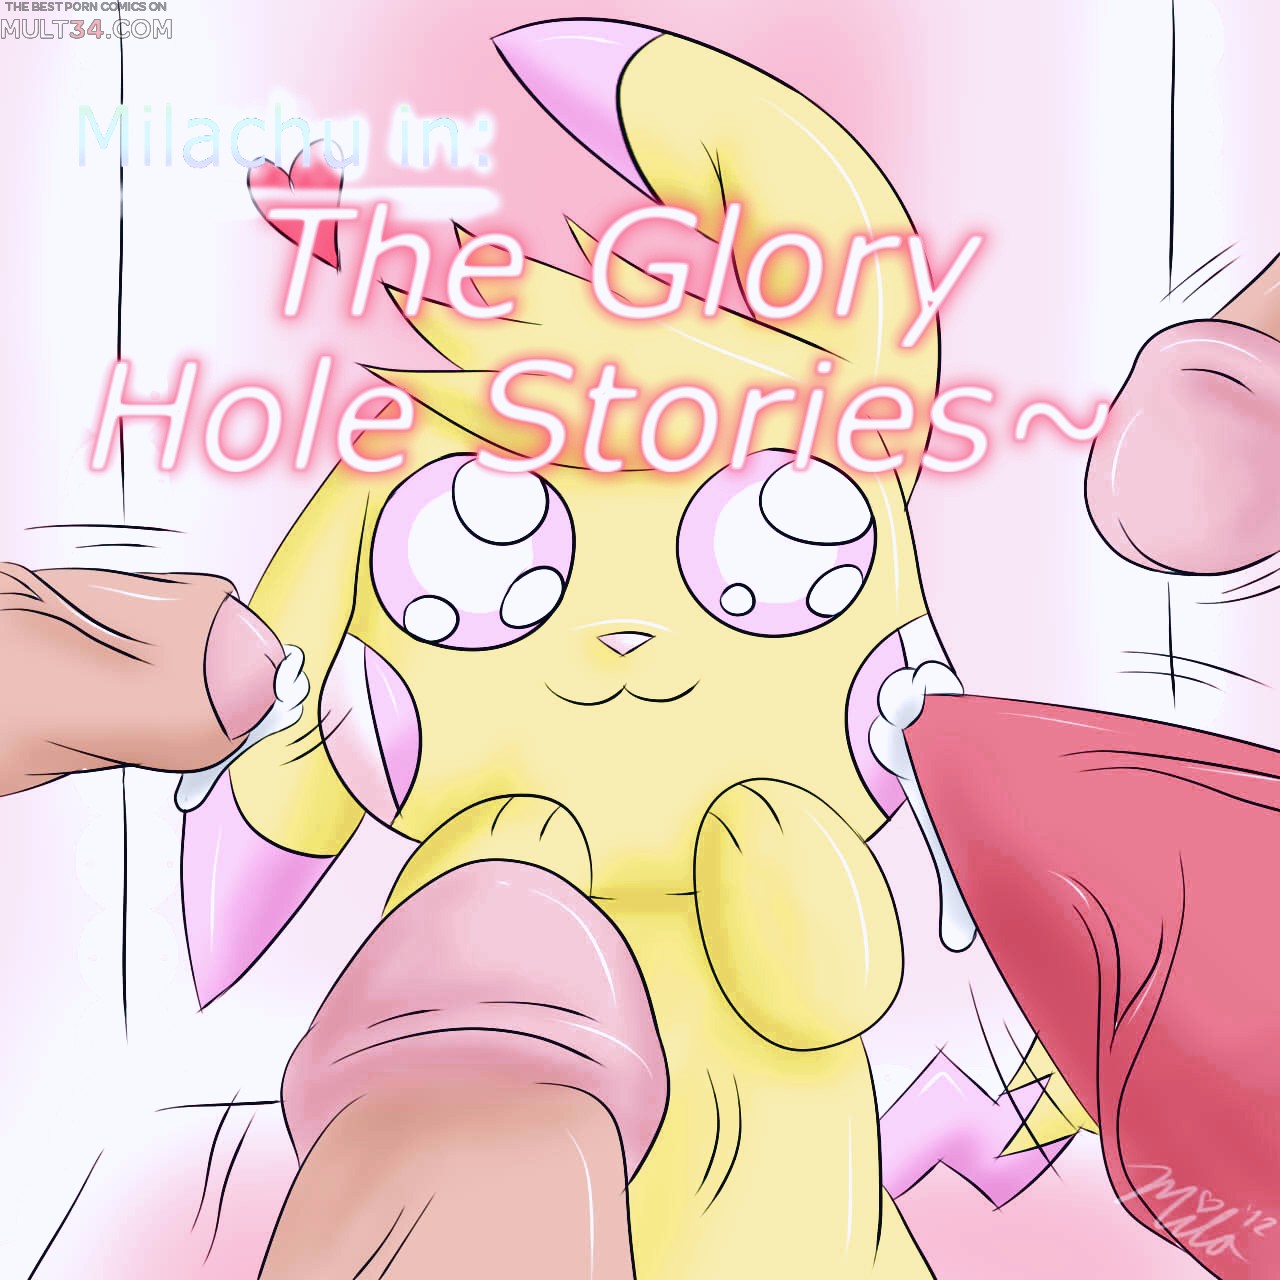 Glory Hole Stories porn comic page 1 on category Pokemon